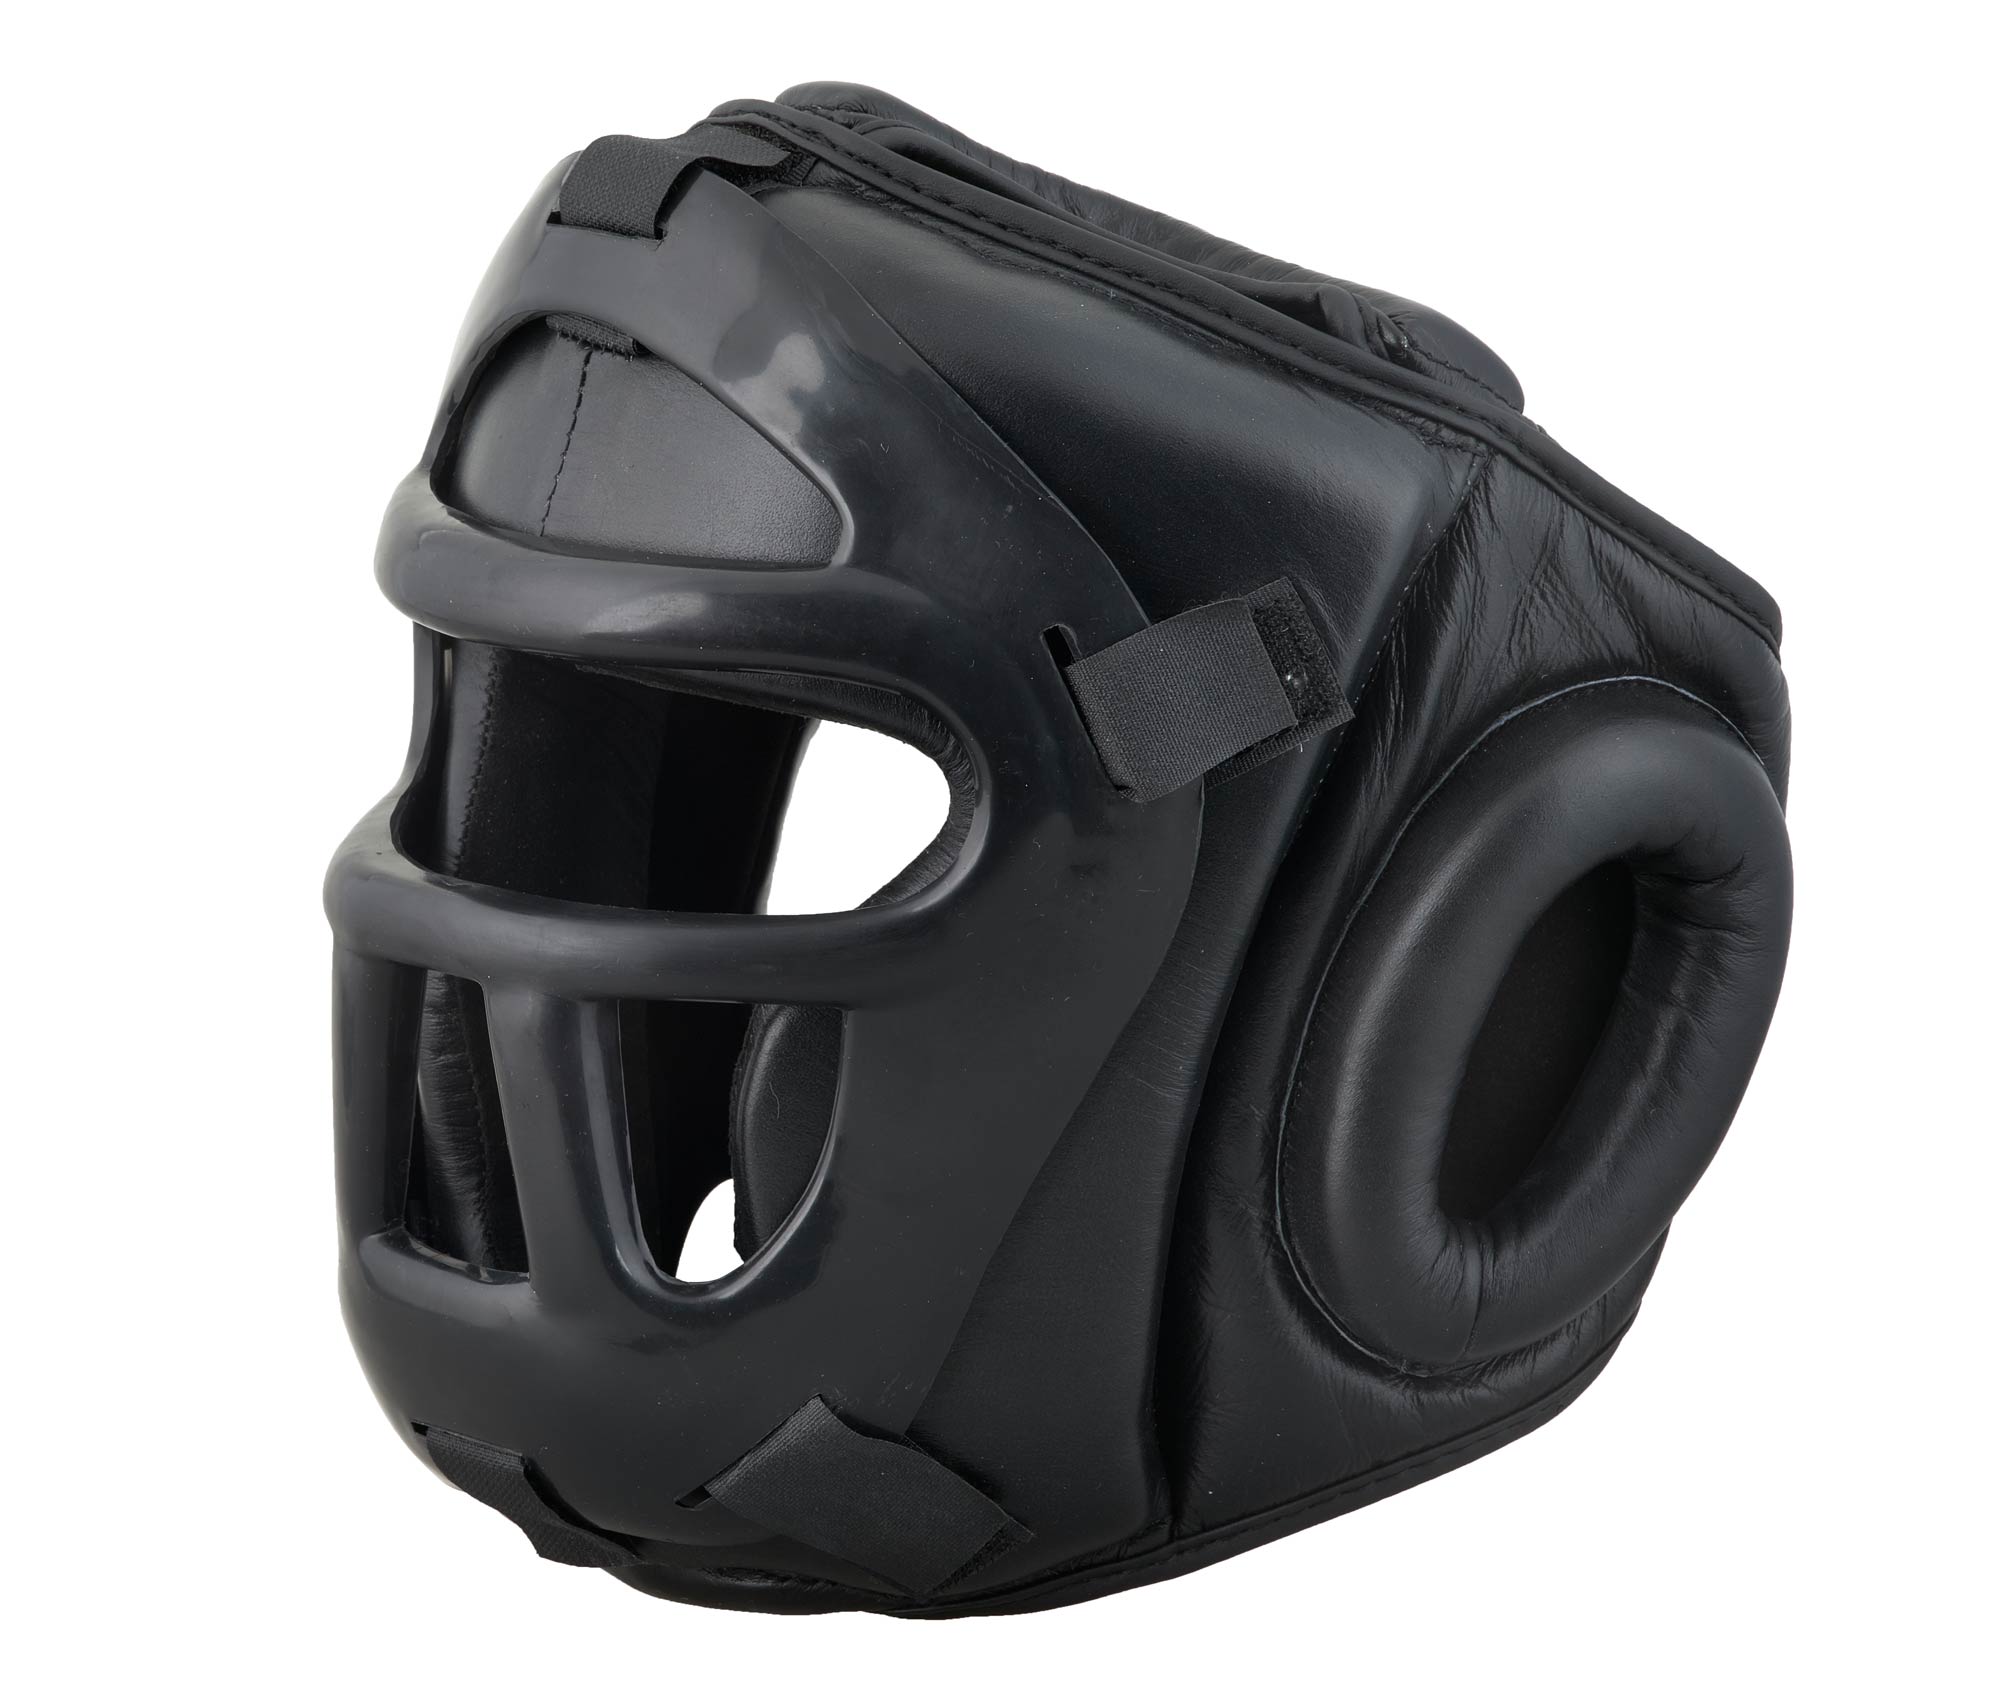 Ju-Sports Head Protector Mask